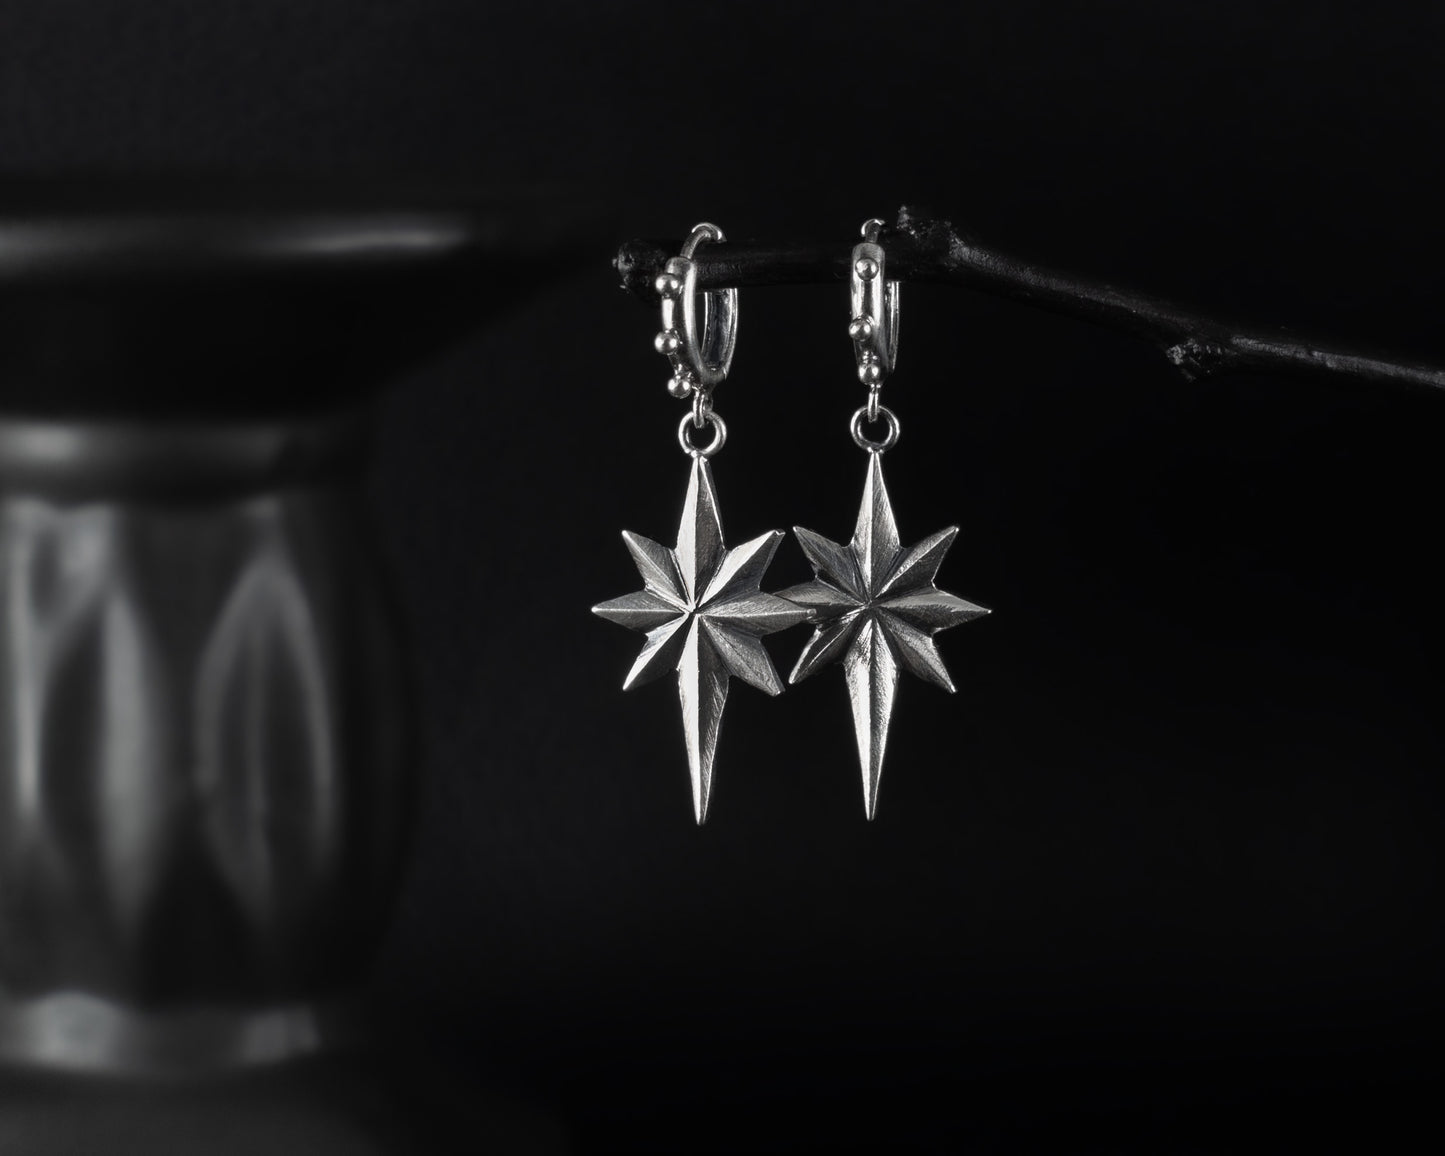 EKRJ590_North Star One-of-a kind Handmade Silver Earrings